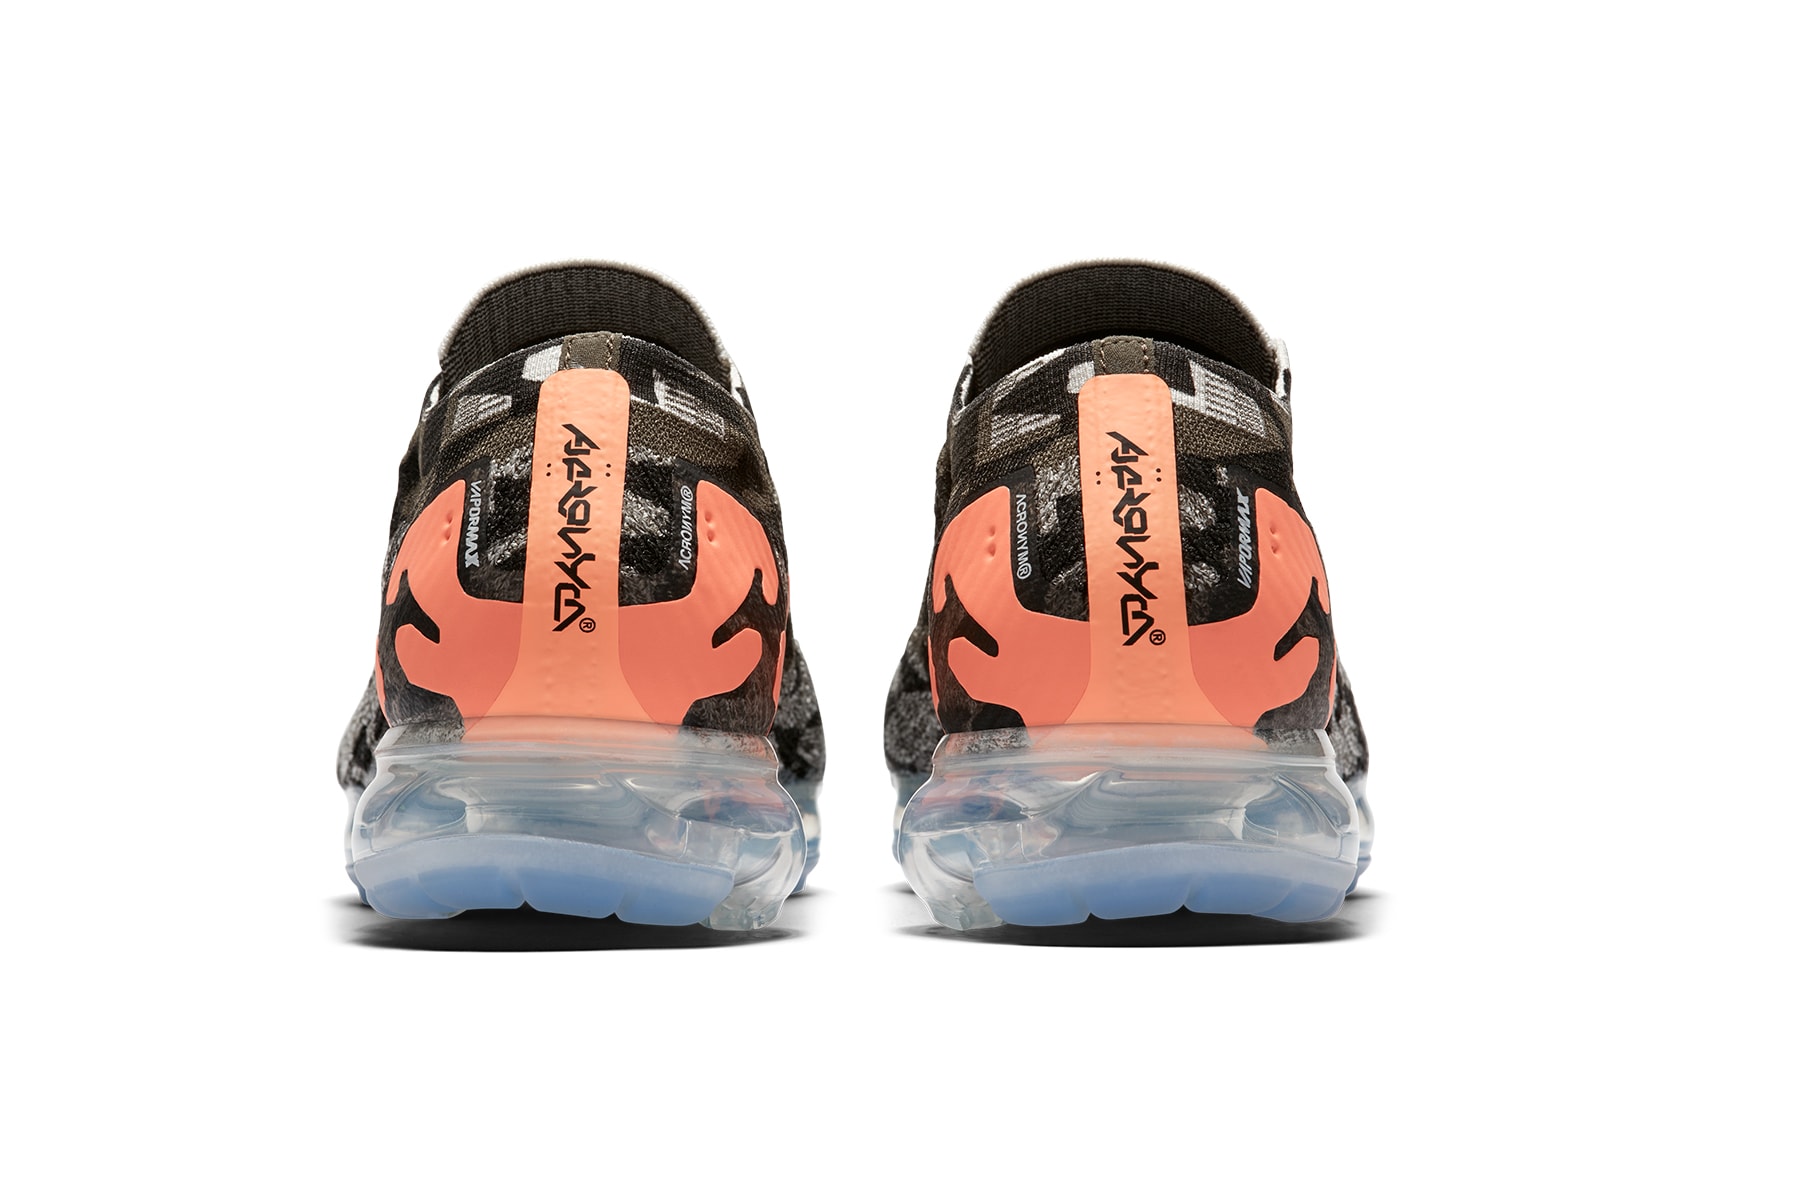 ACRONYM x Nike Air VaporMax Moc 2 | Hypebeast